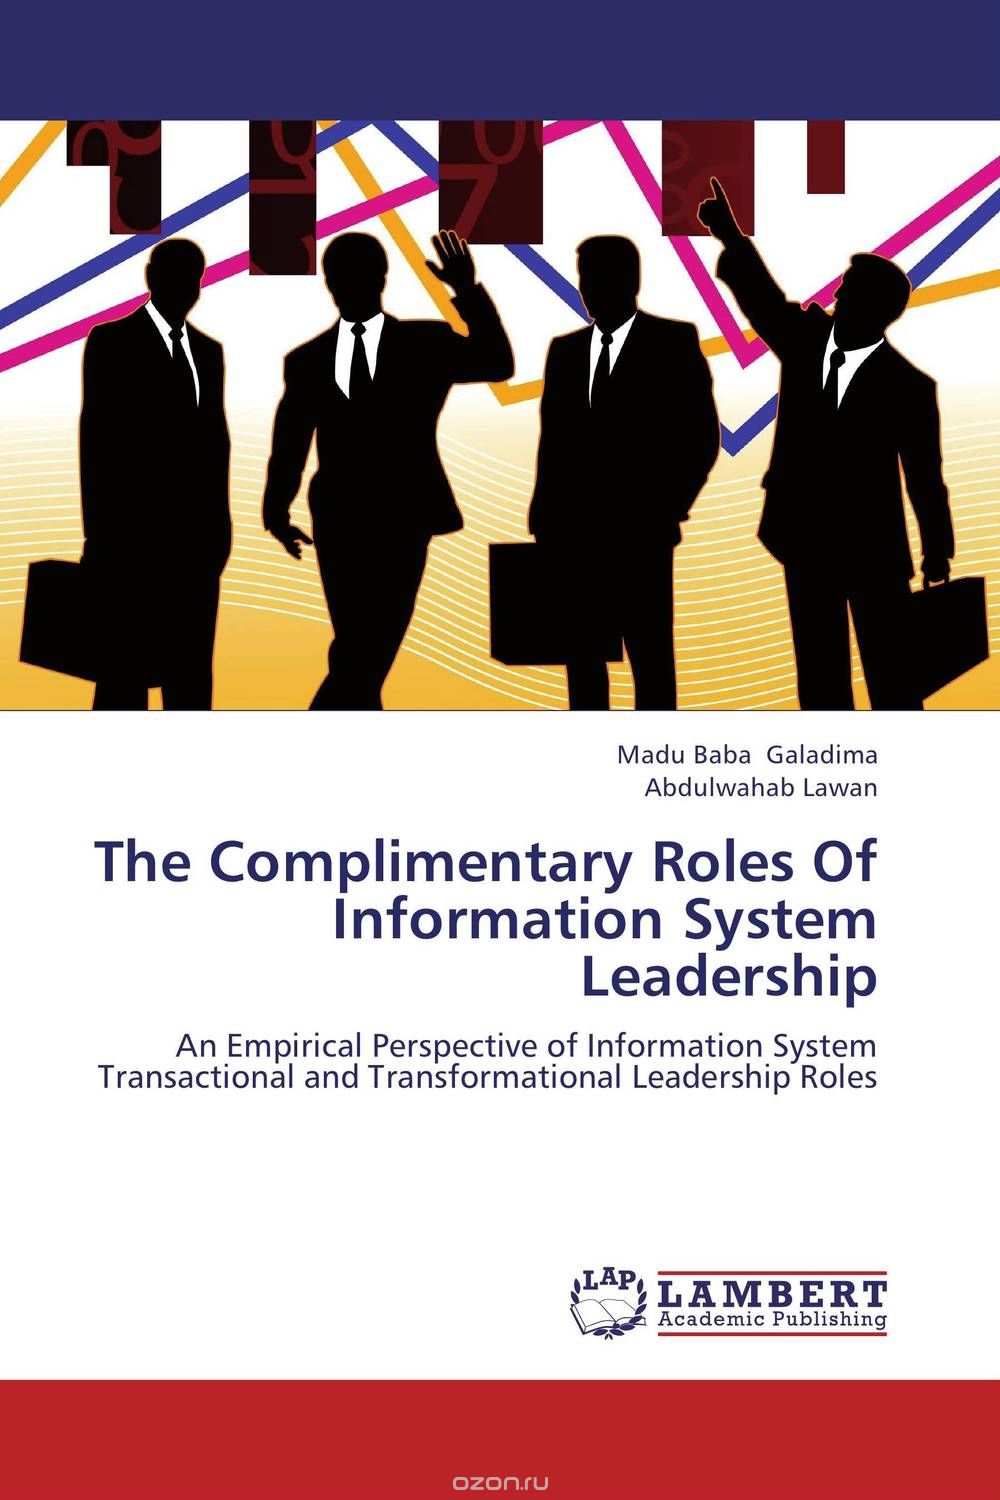 Скачать книгу "The Complimentary Roles Of Information System Leadership"